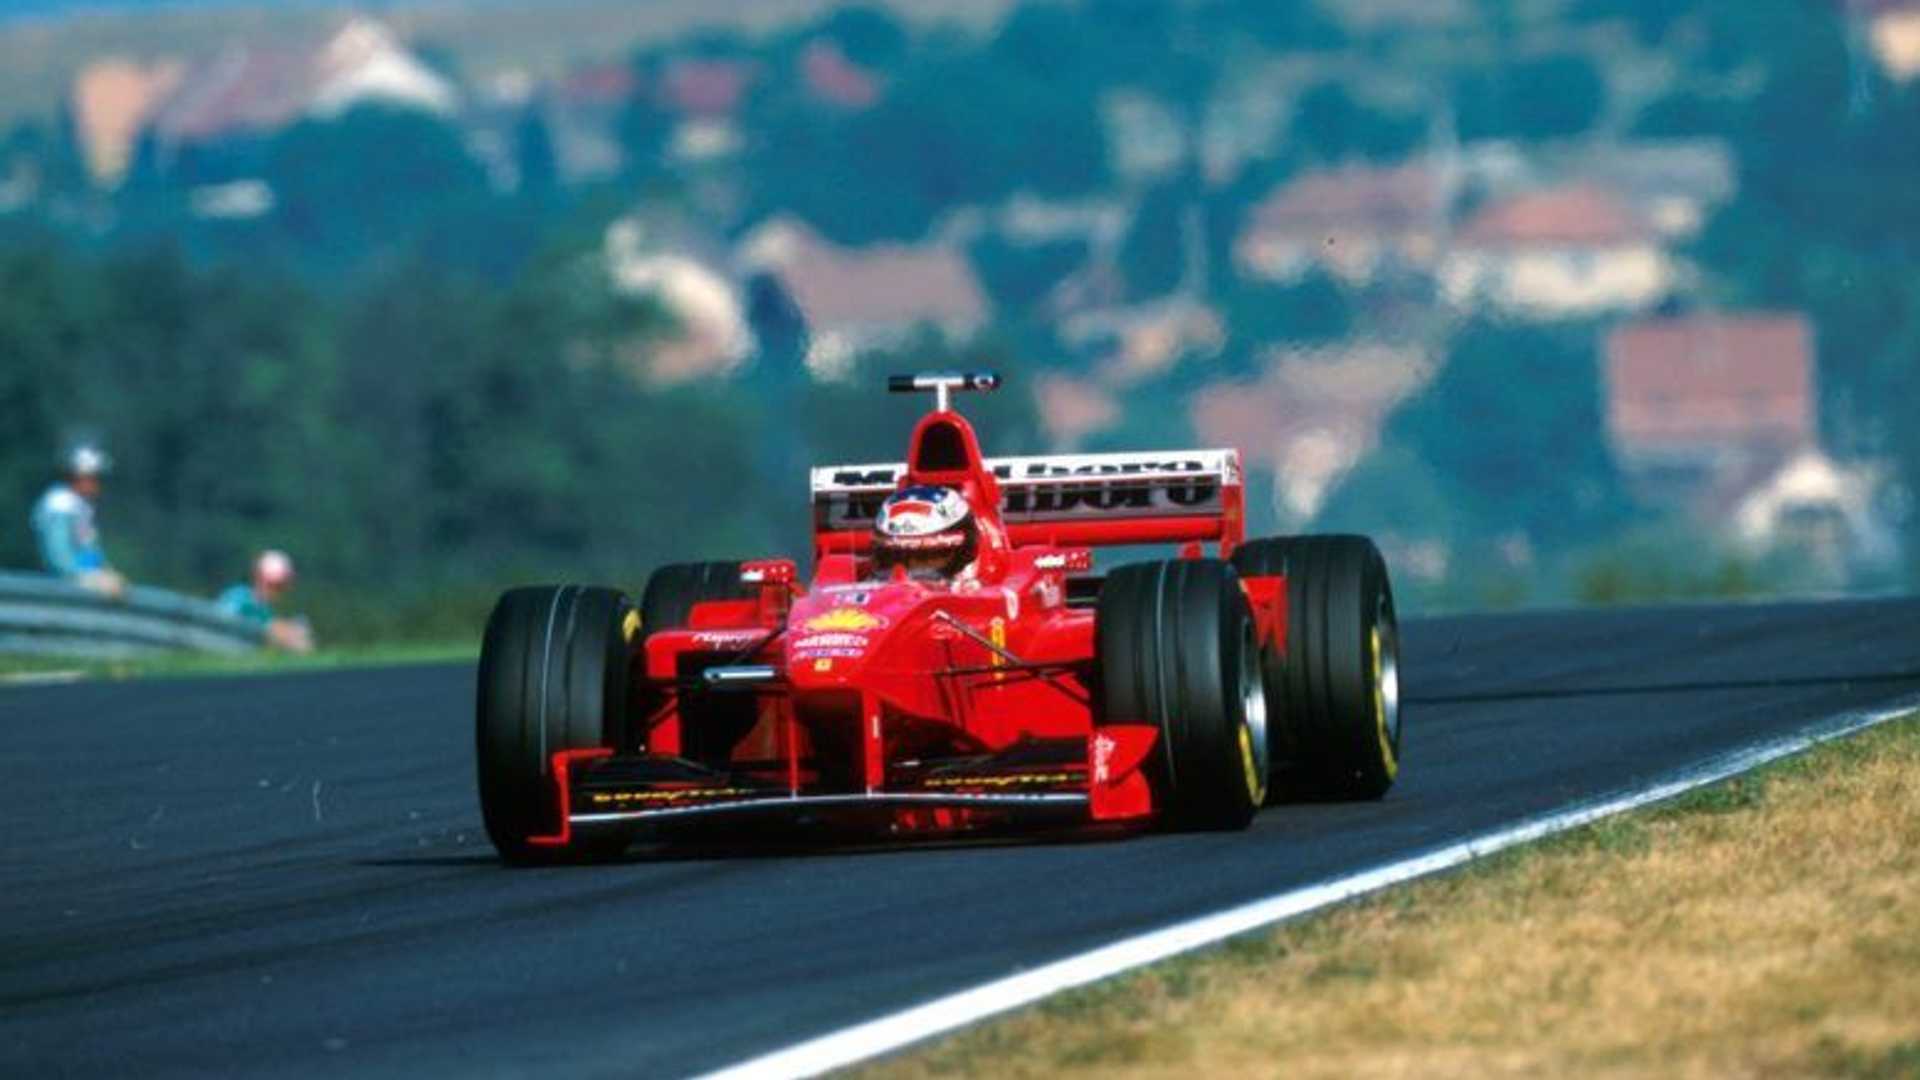 Ferrari F300 Wallpapers